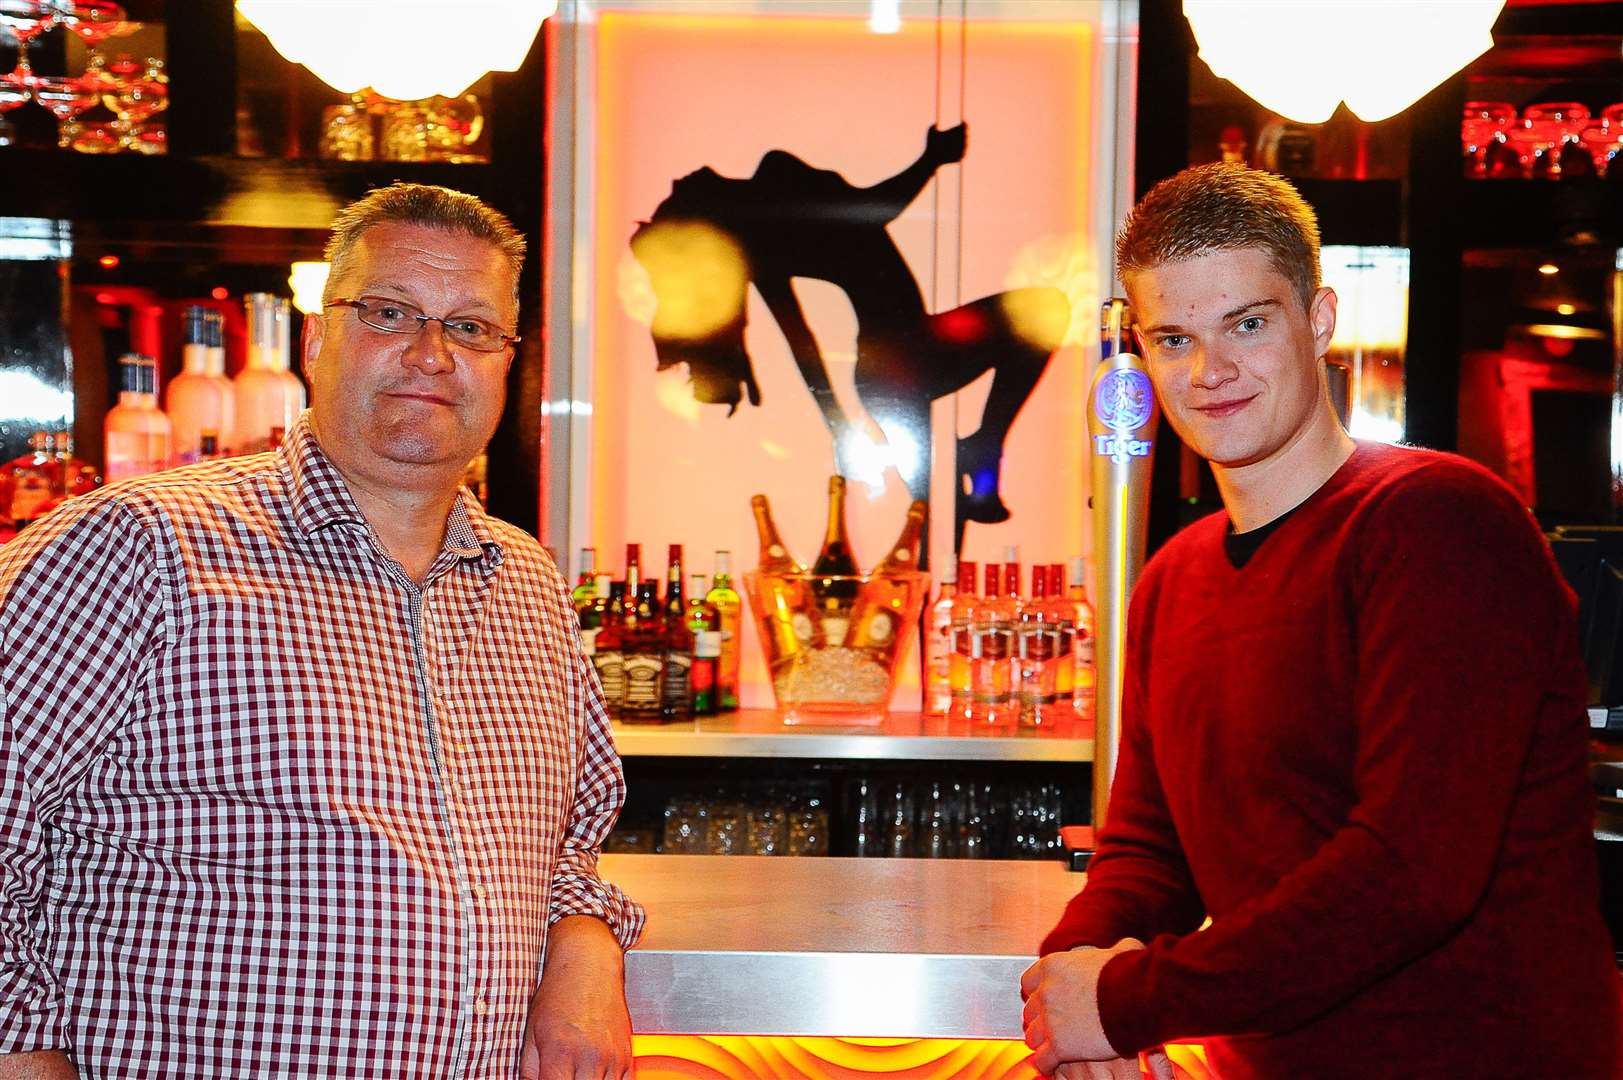 Ralph and Alistair Noel reopened the premises as The Bing strip club in 2013